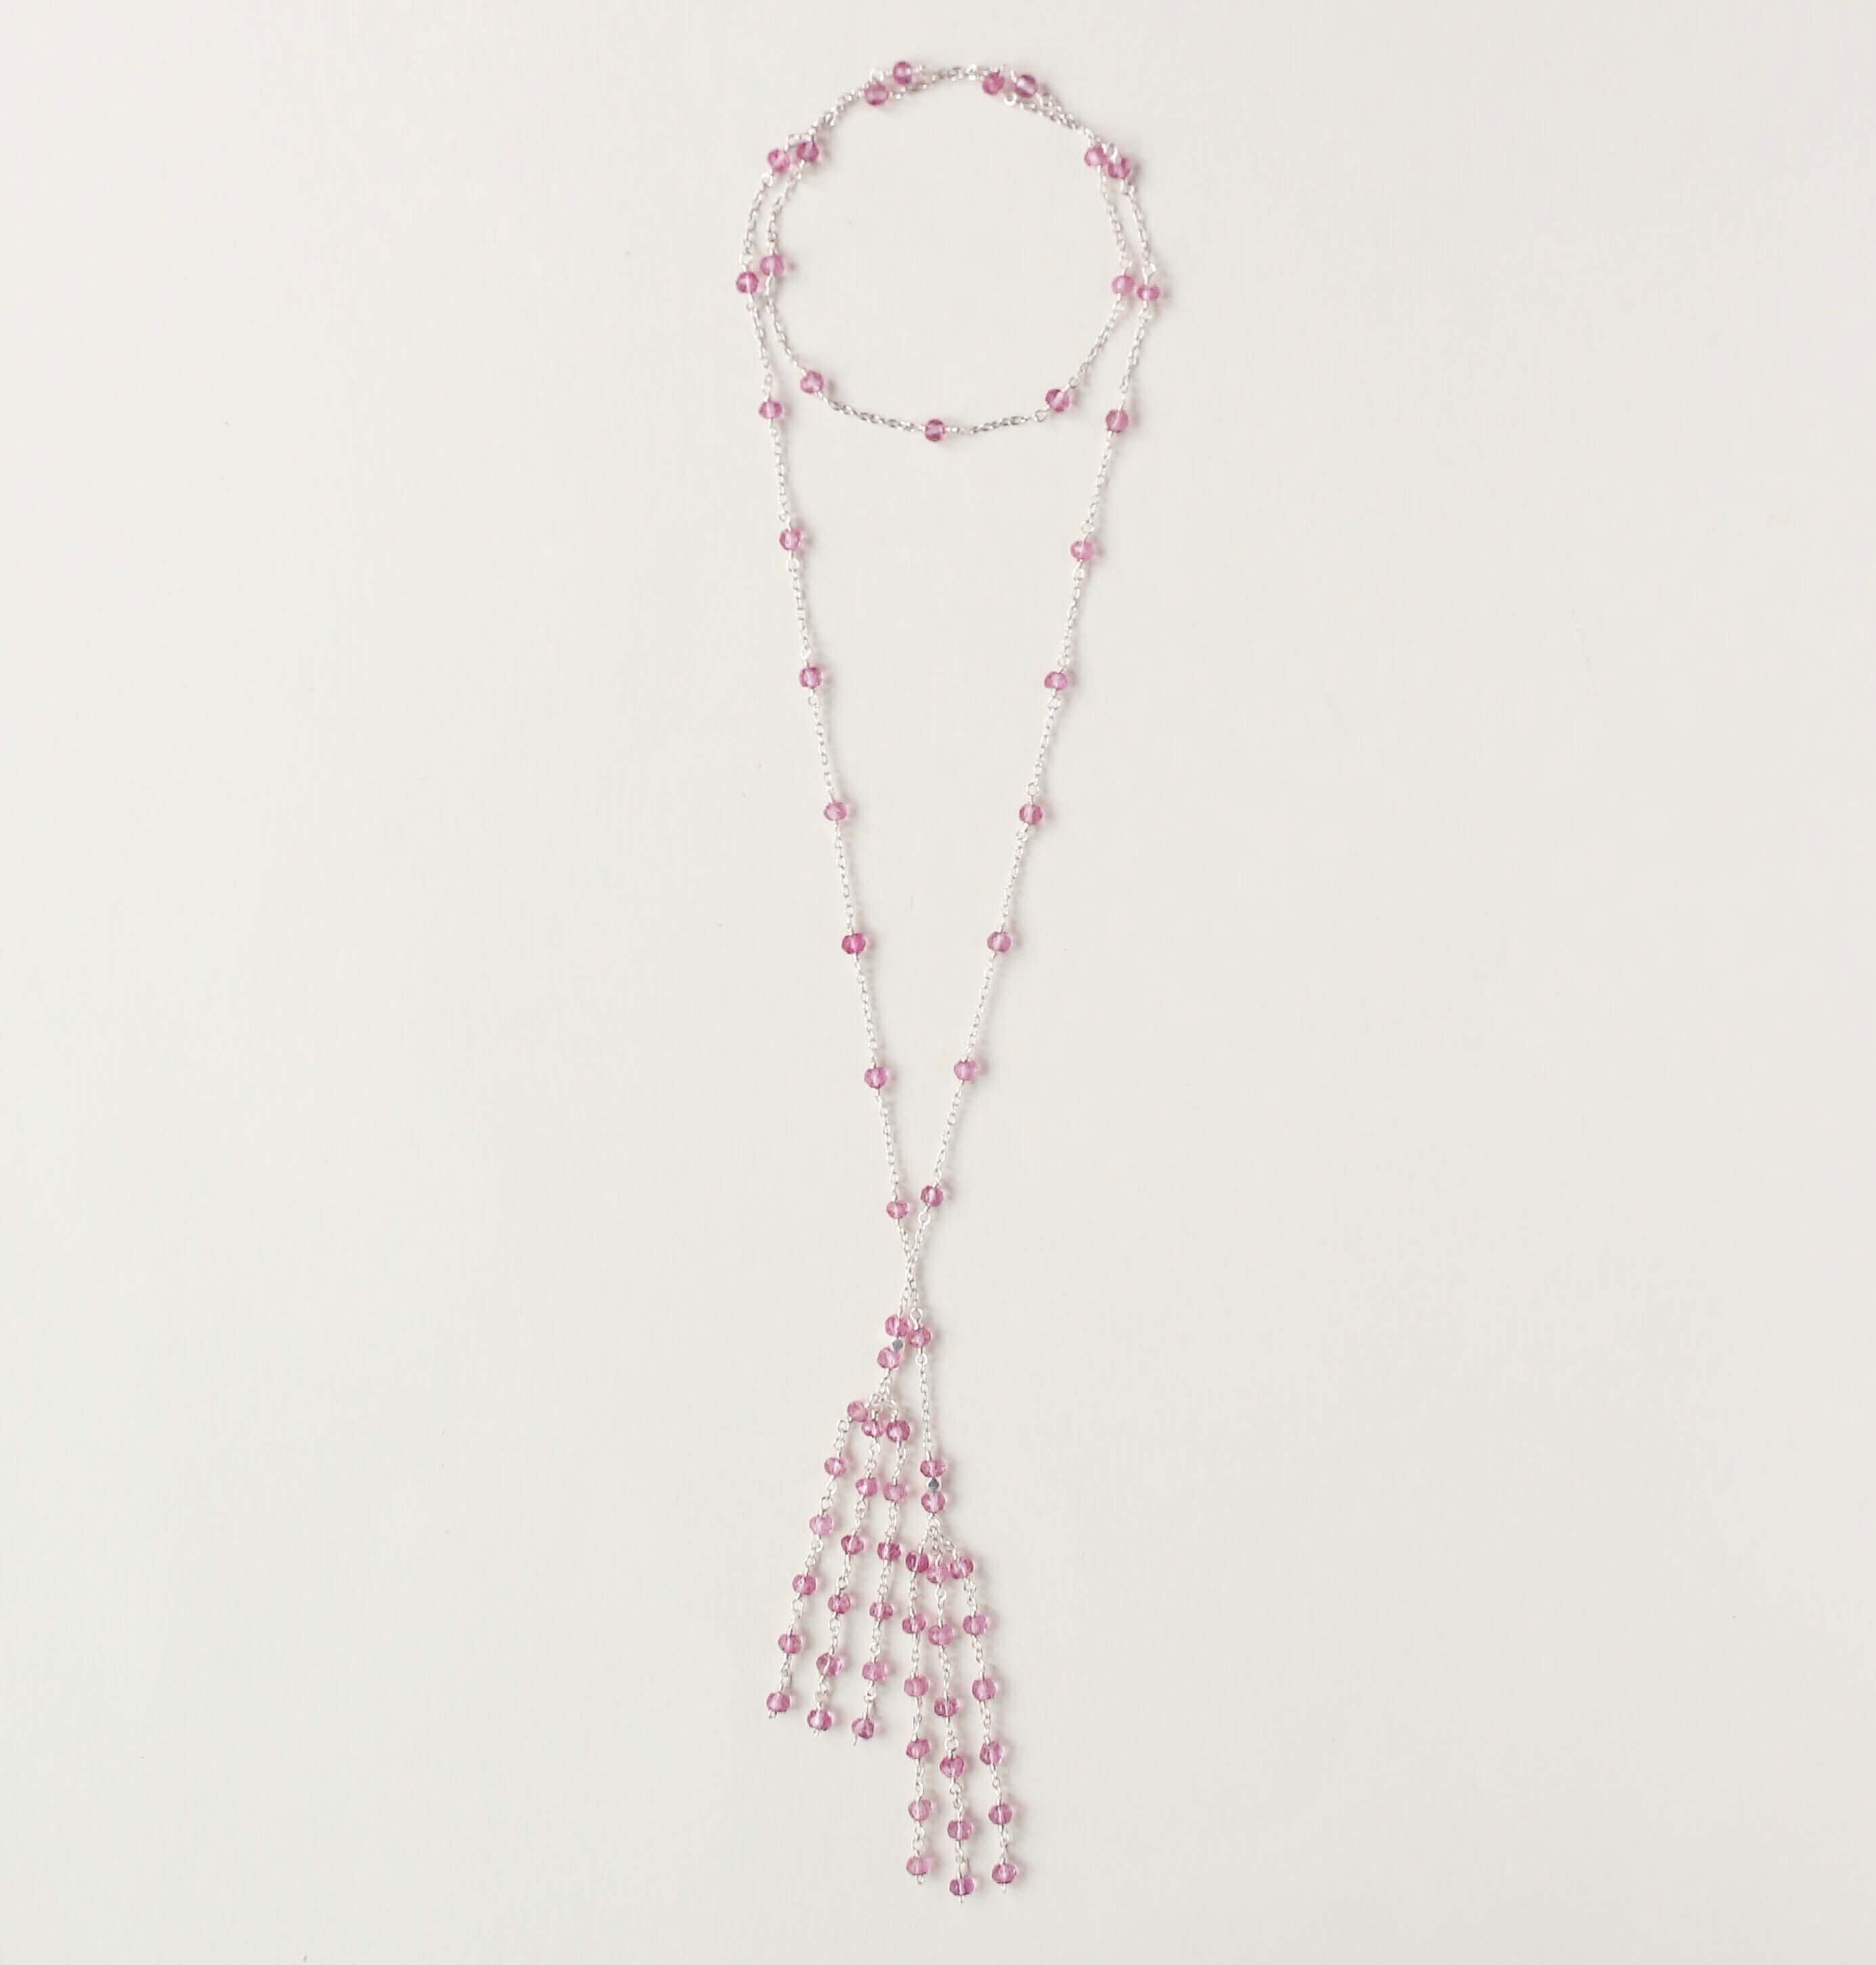 Rhodium plated Handmade Lariat Necklace Featuring Pink Tourmaline Gemstones